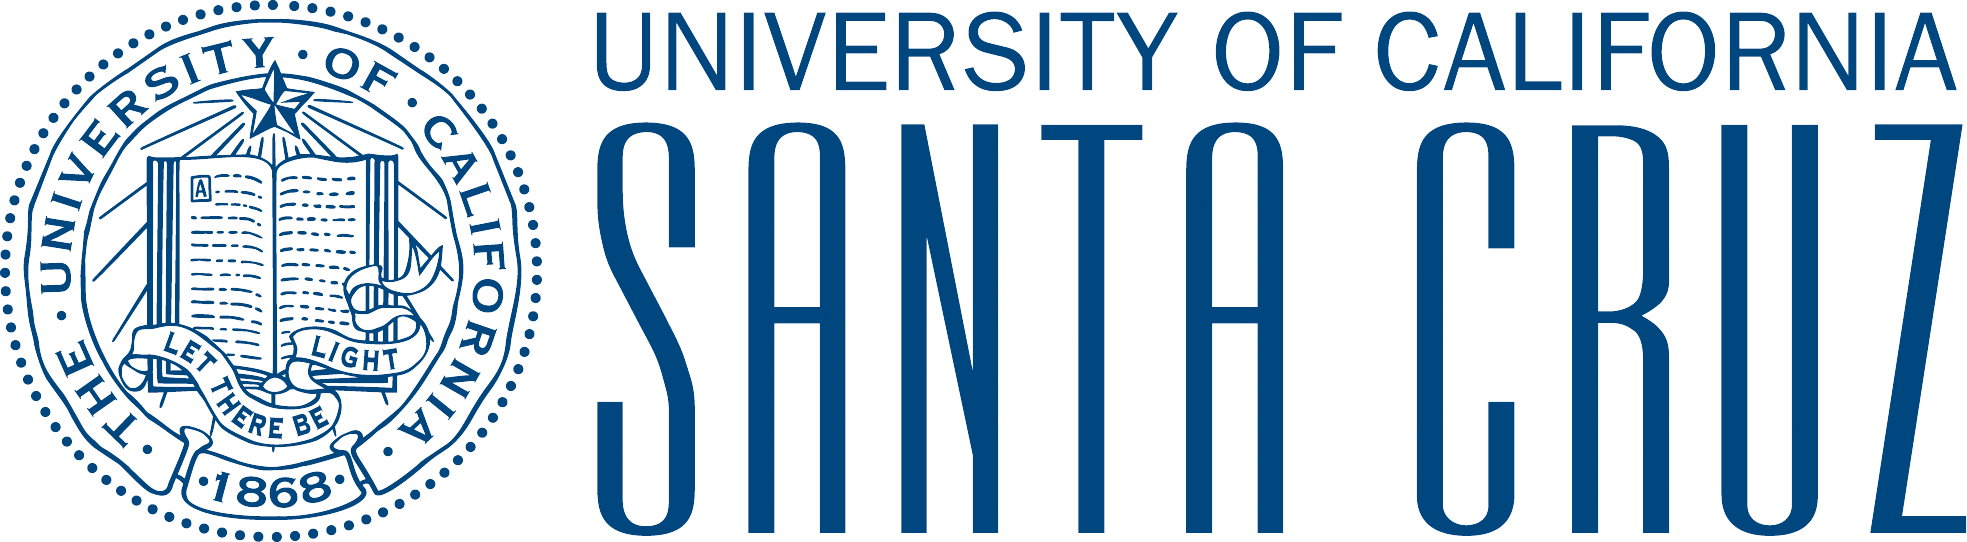 UC Santa Cruz Logo and Link